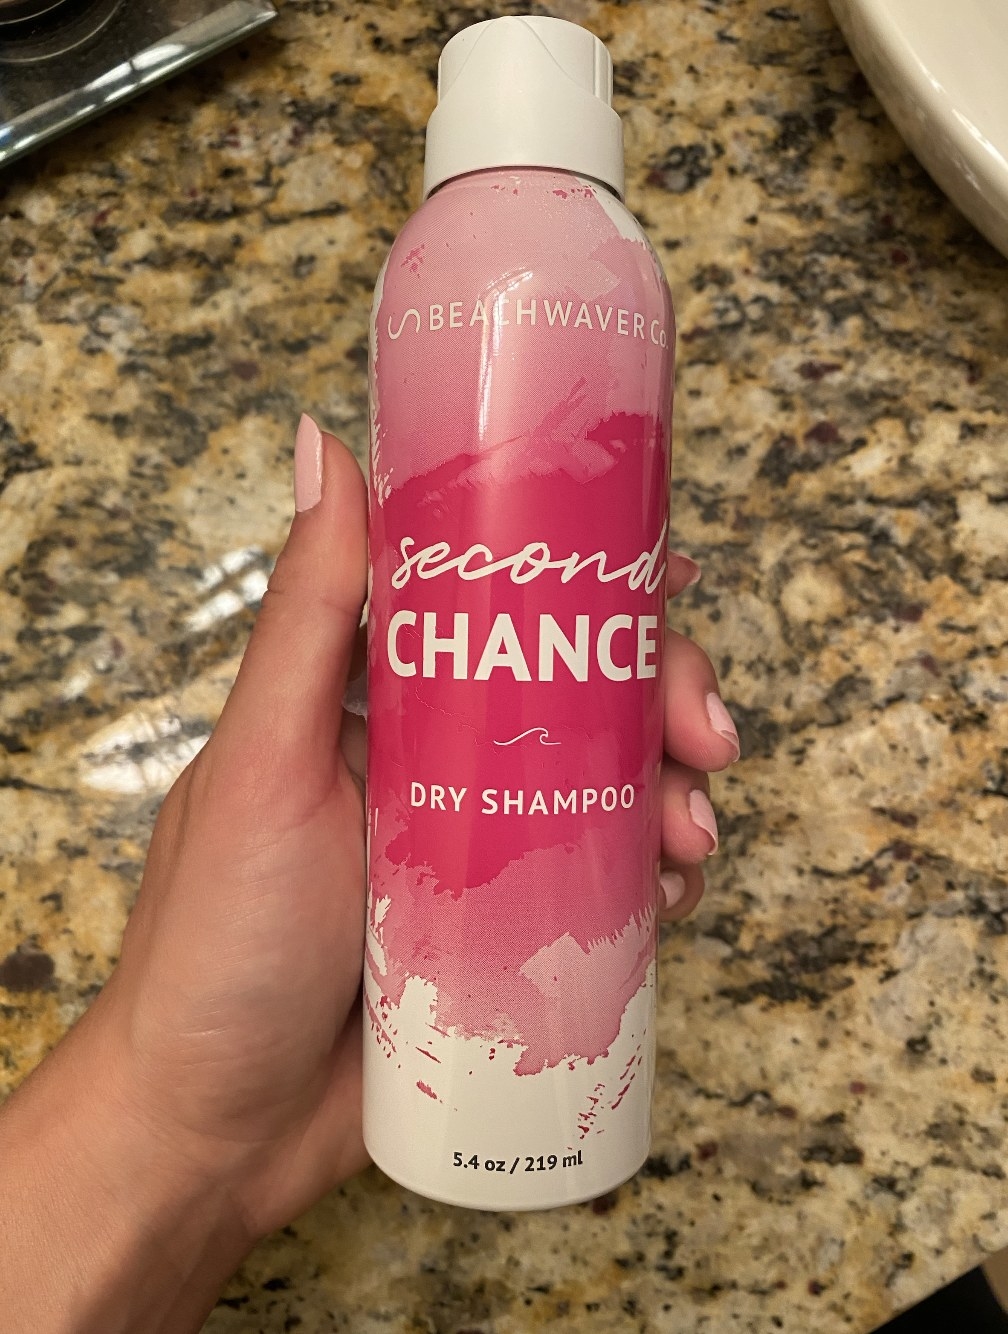 Beachwaver dry shampoo